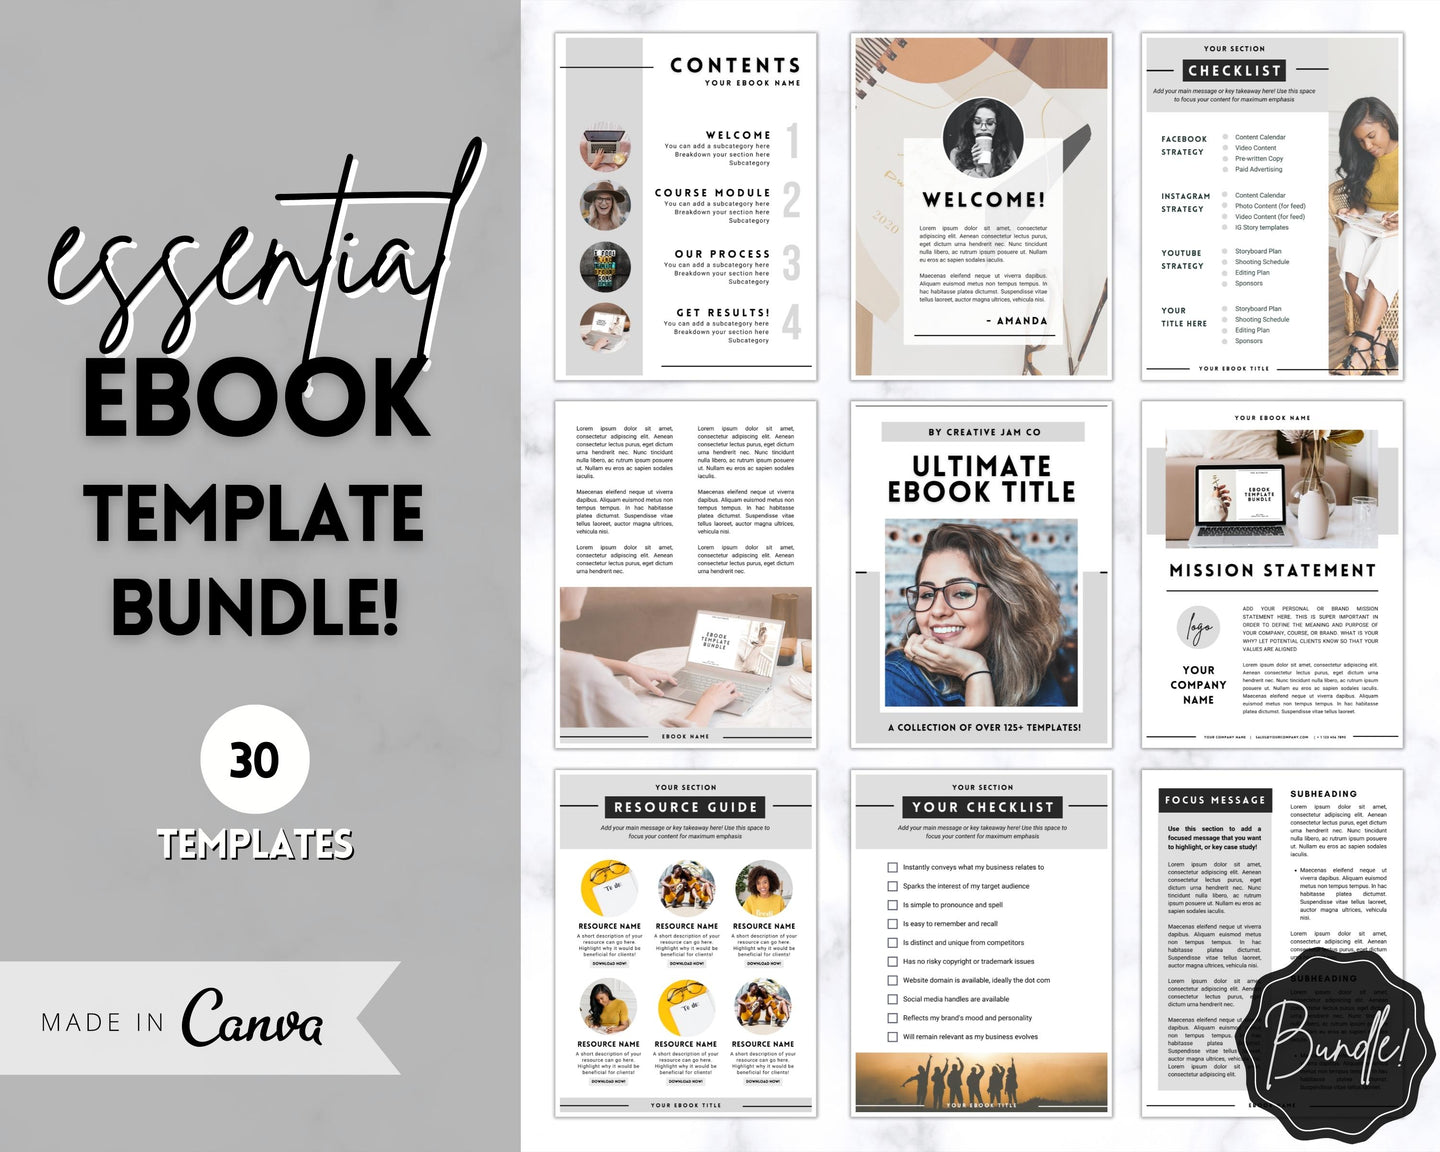 Best Kindle deal: Get the Kindle Scribe Essentials bundle for $125